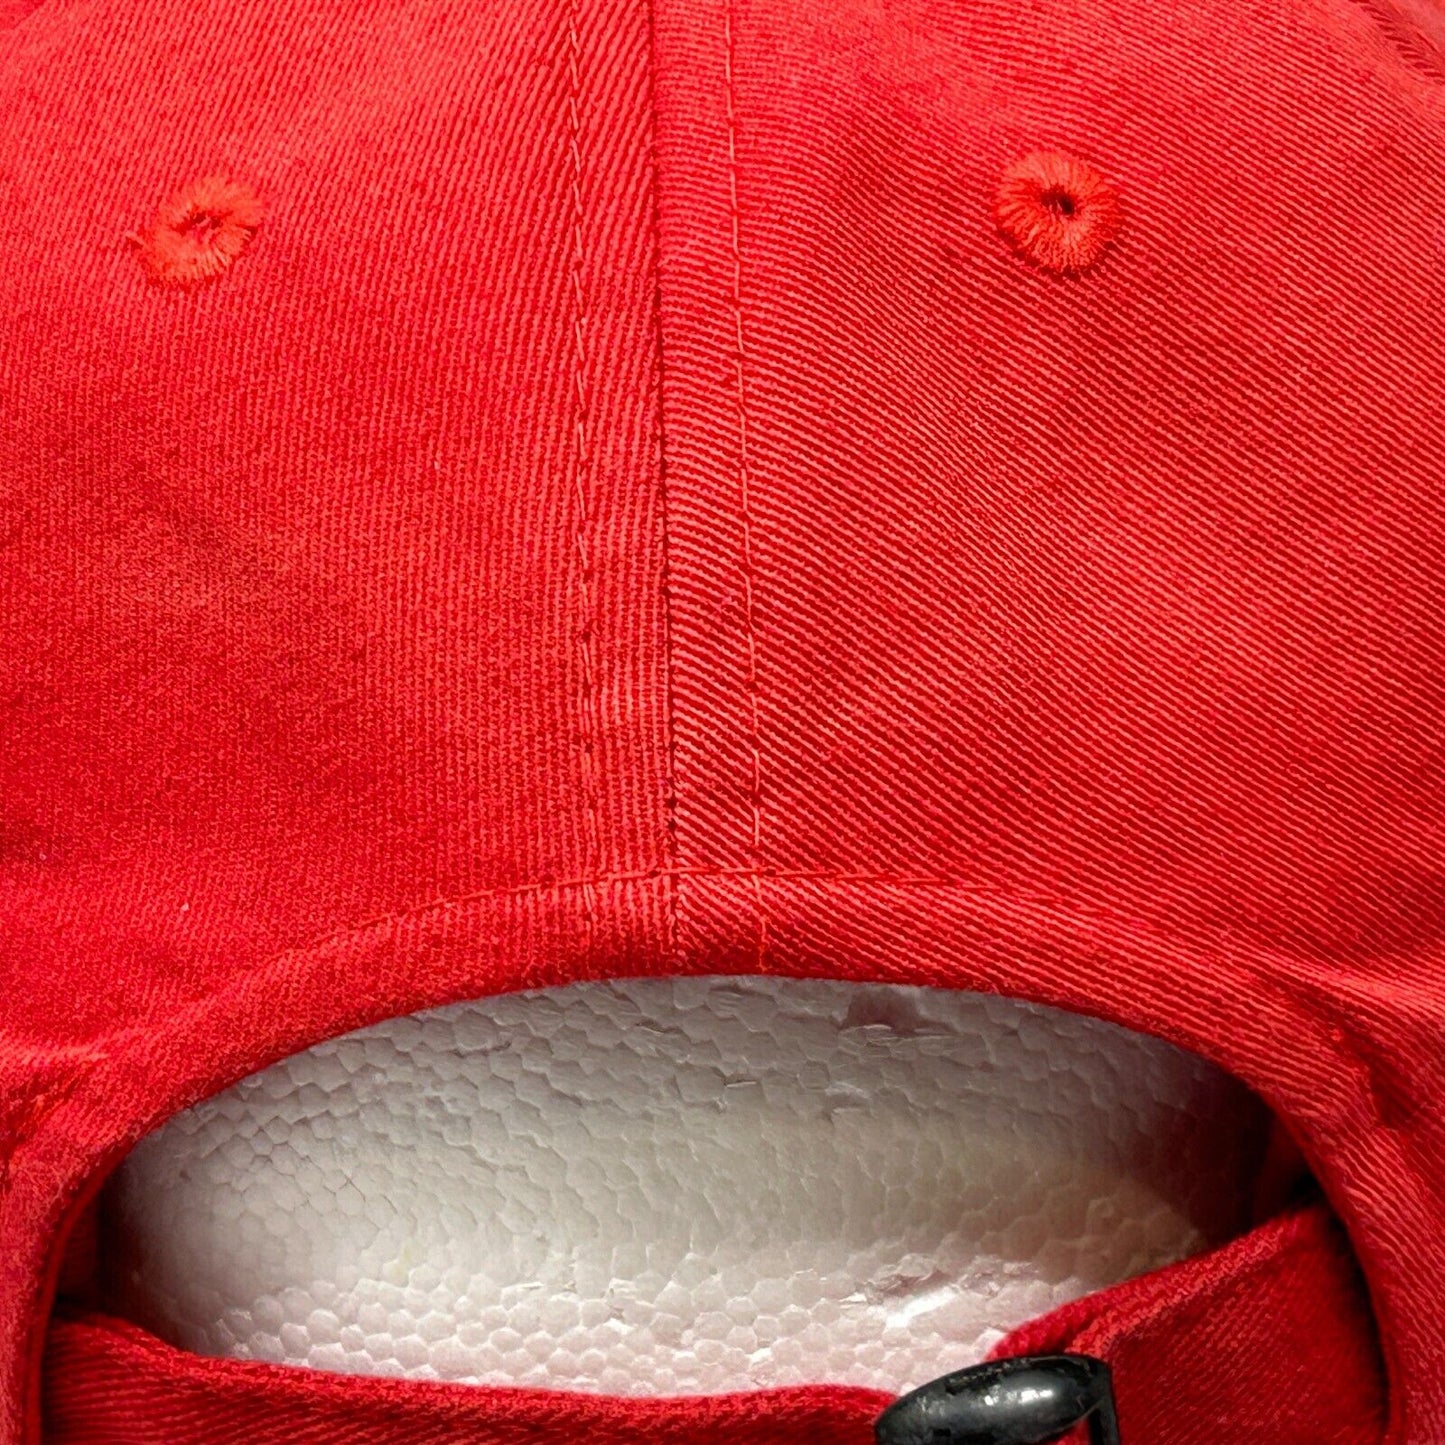 Harrisburg Senators 2012 Signed Youth Hat MiLB Autographed Red Kids Baseball Cap